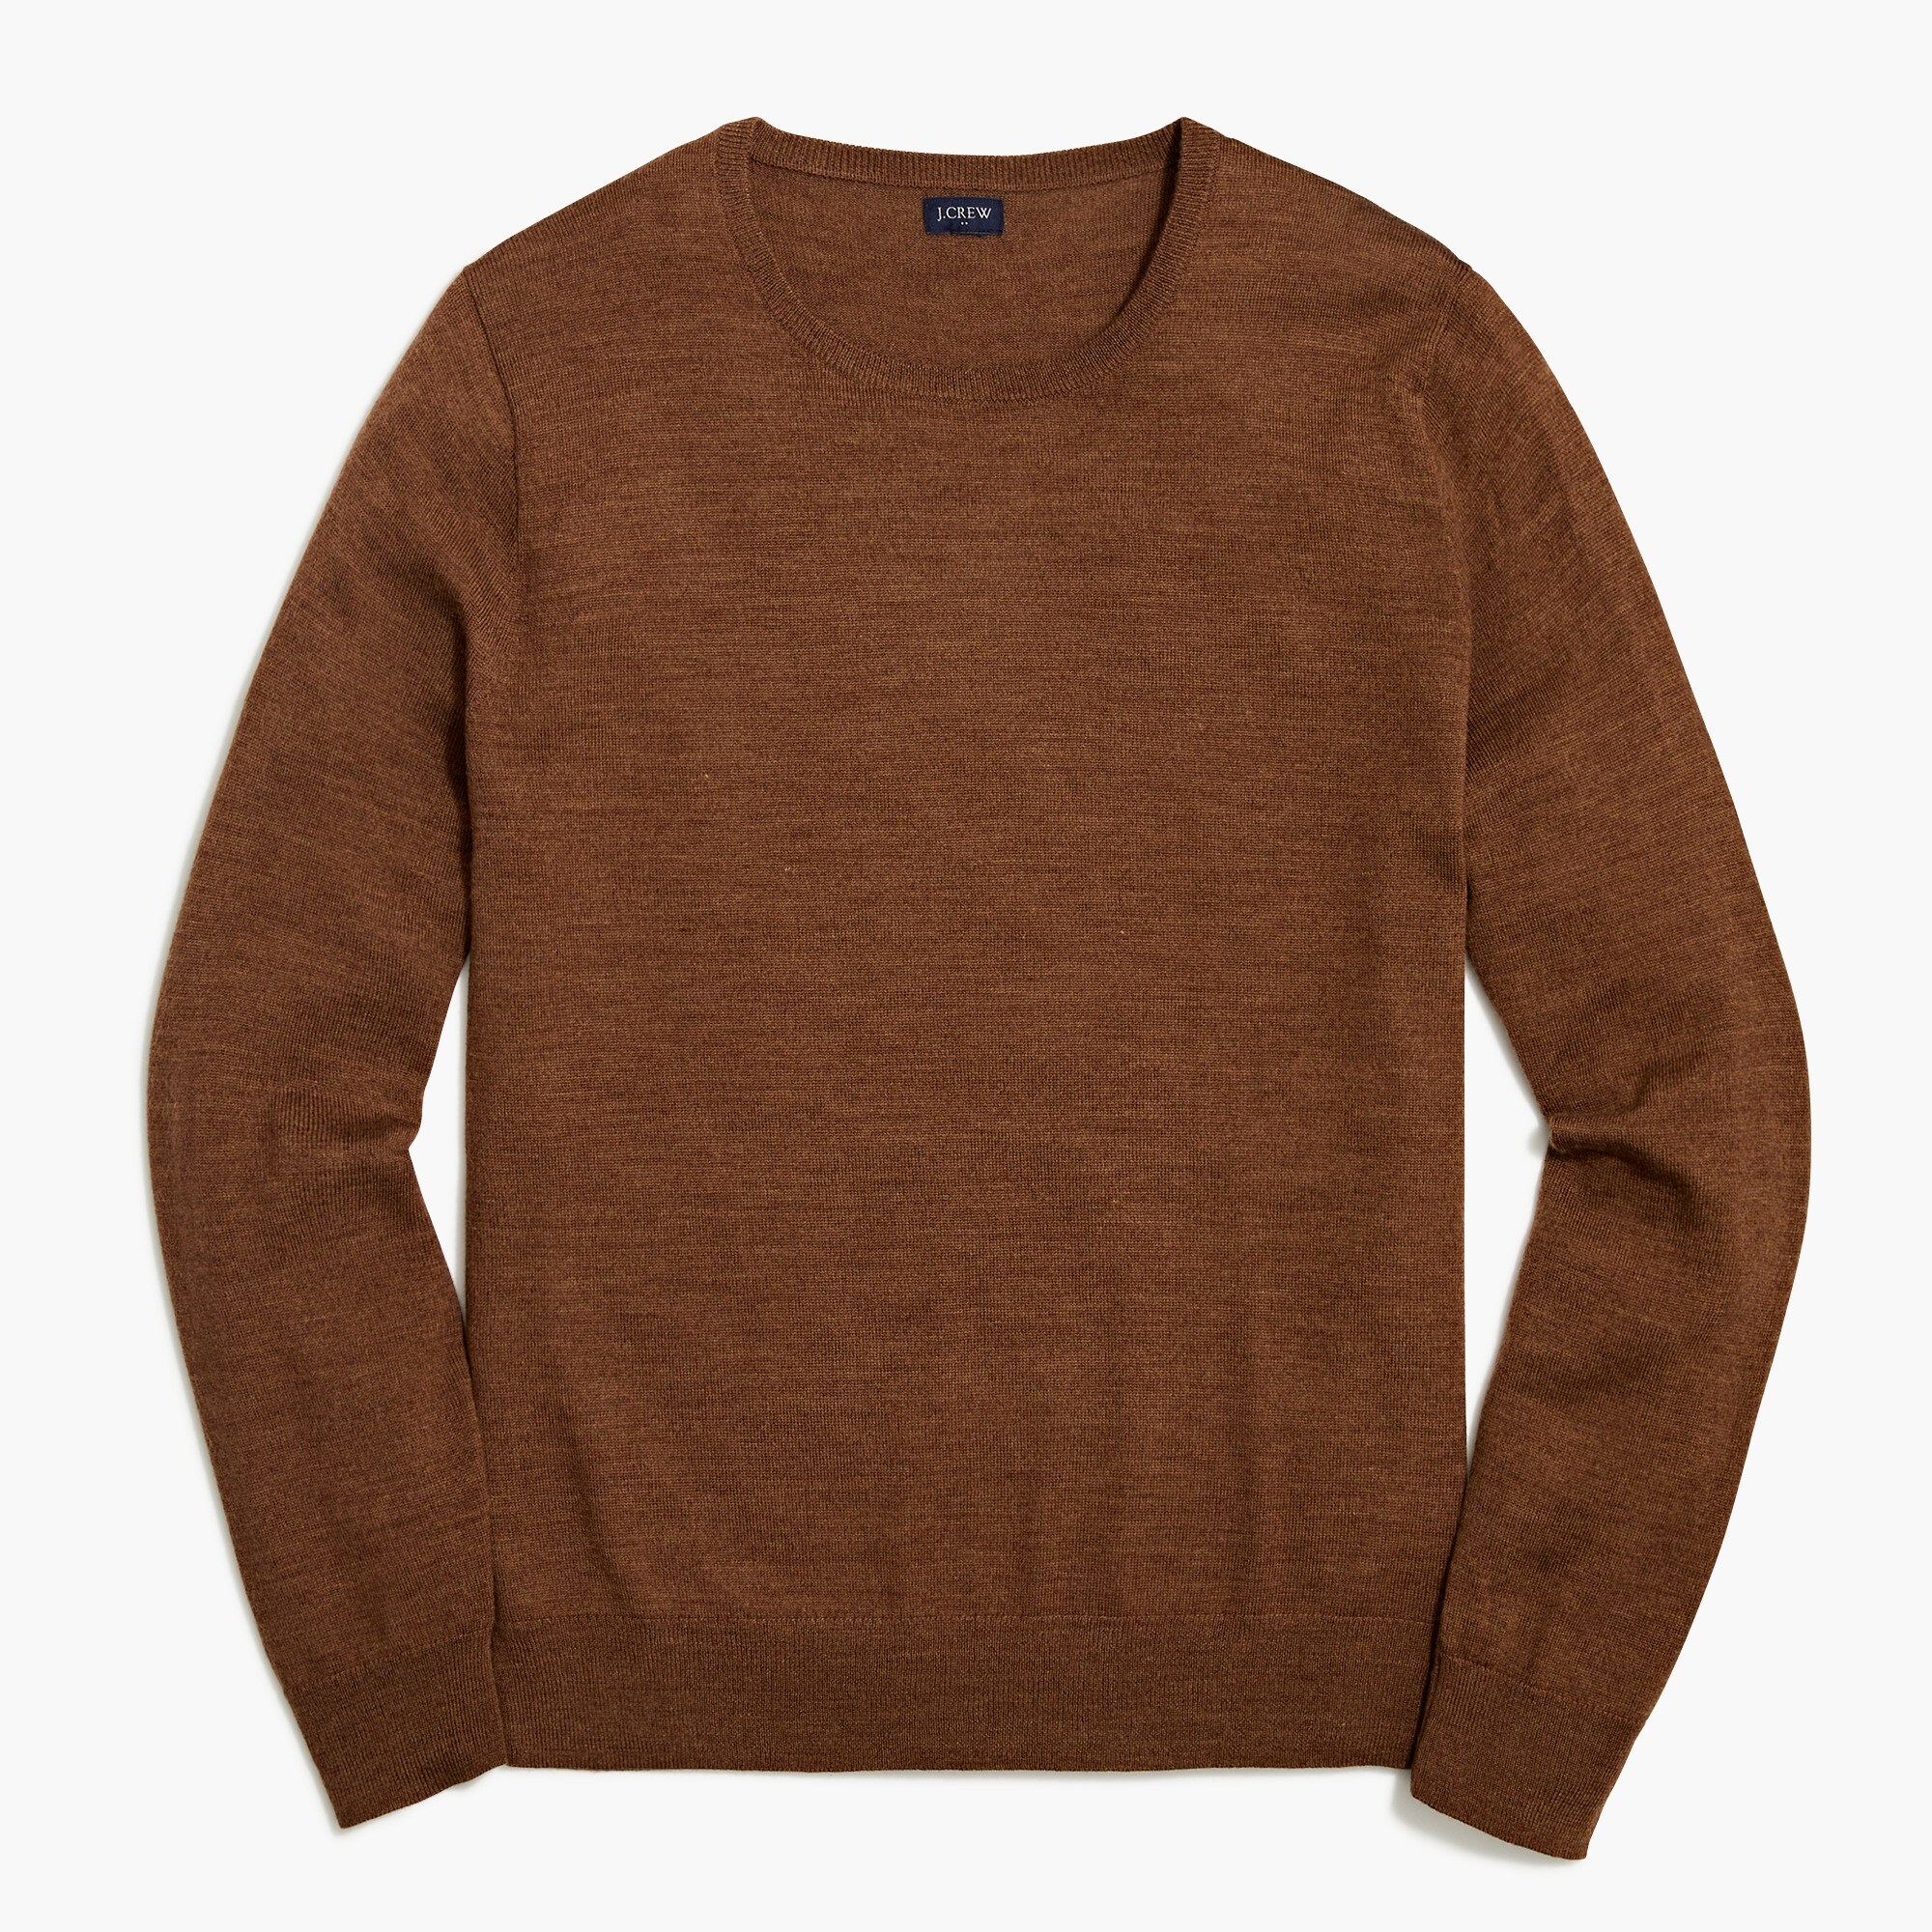  Machine-washable merino wool-blend crewneck sweater